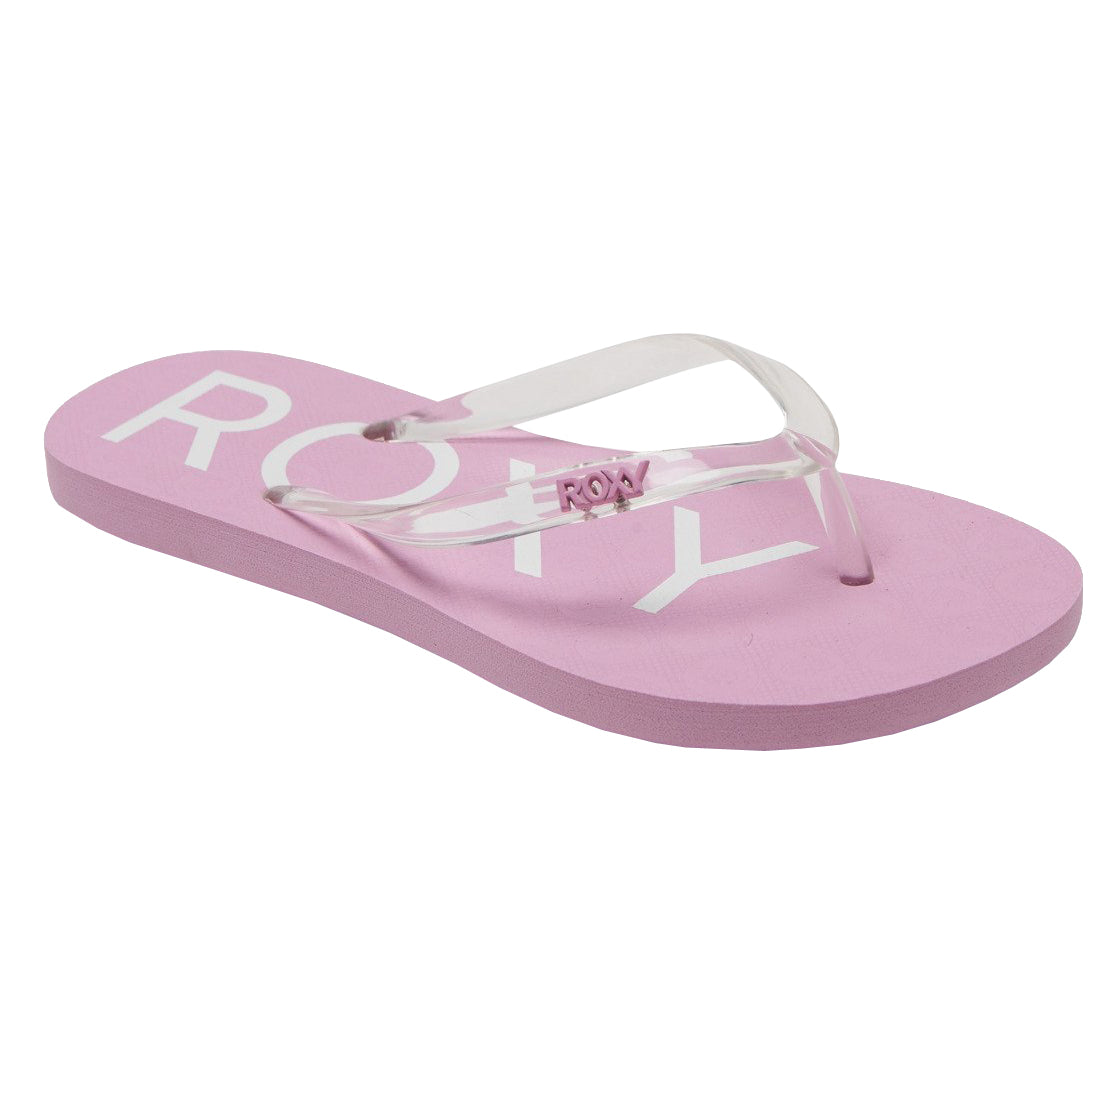 Roxy Viva Jelly Girls Sandal LRS-Lilac Rose 12 C